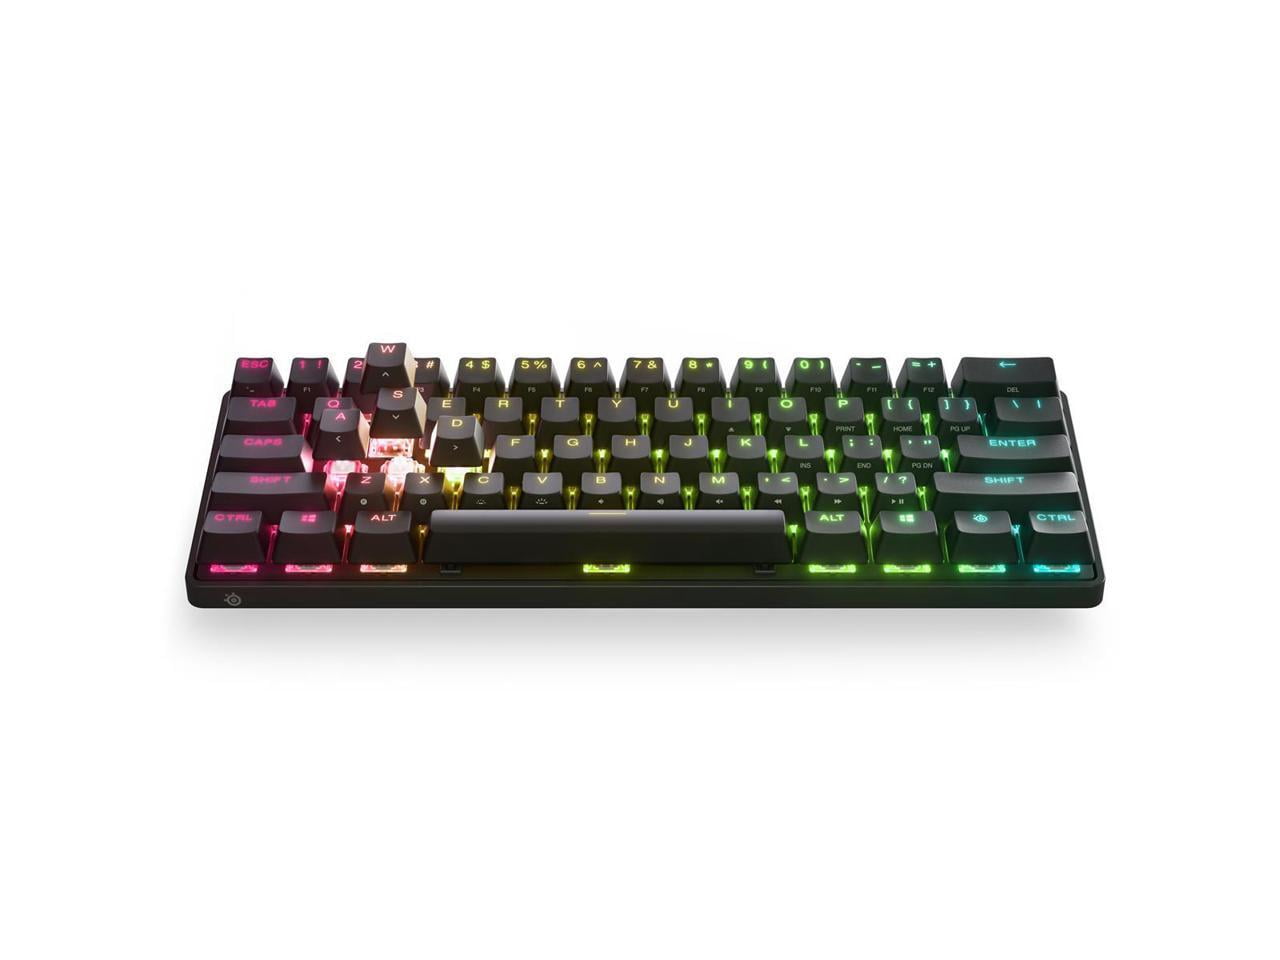 SteelSeries Super Limited Apex Pro Mini Keyboard